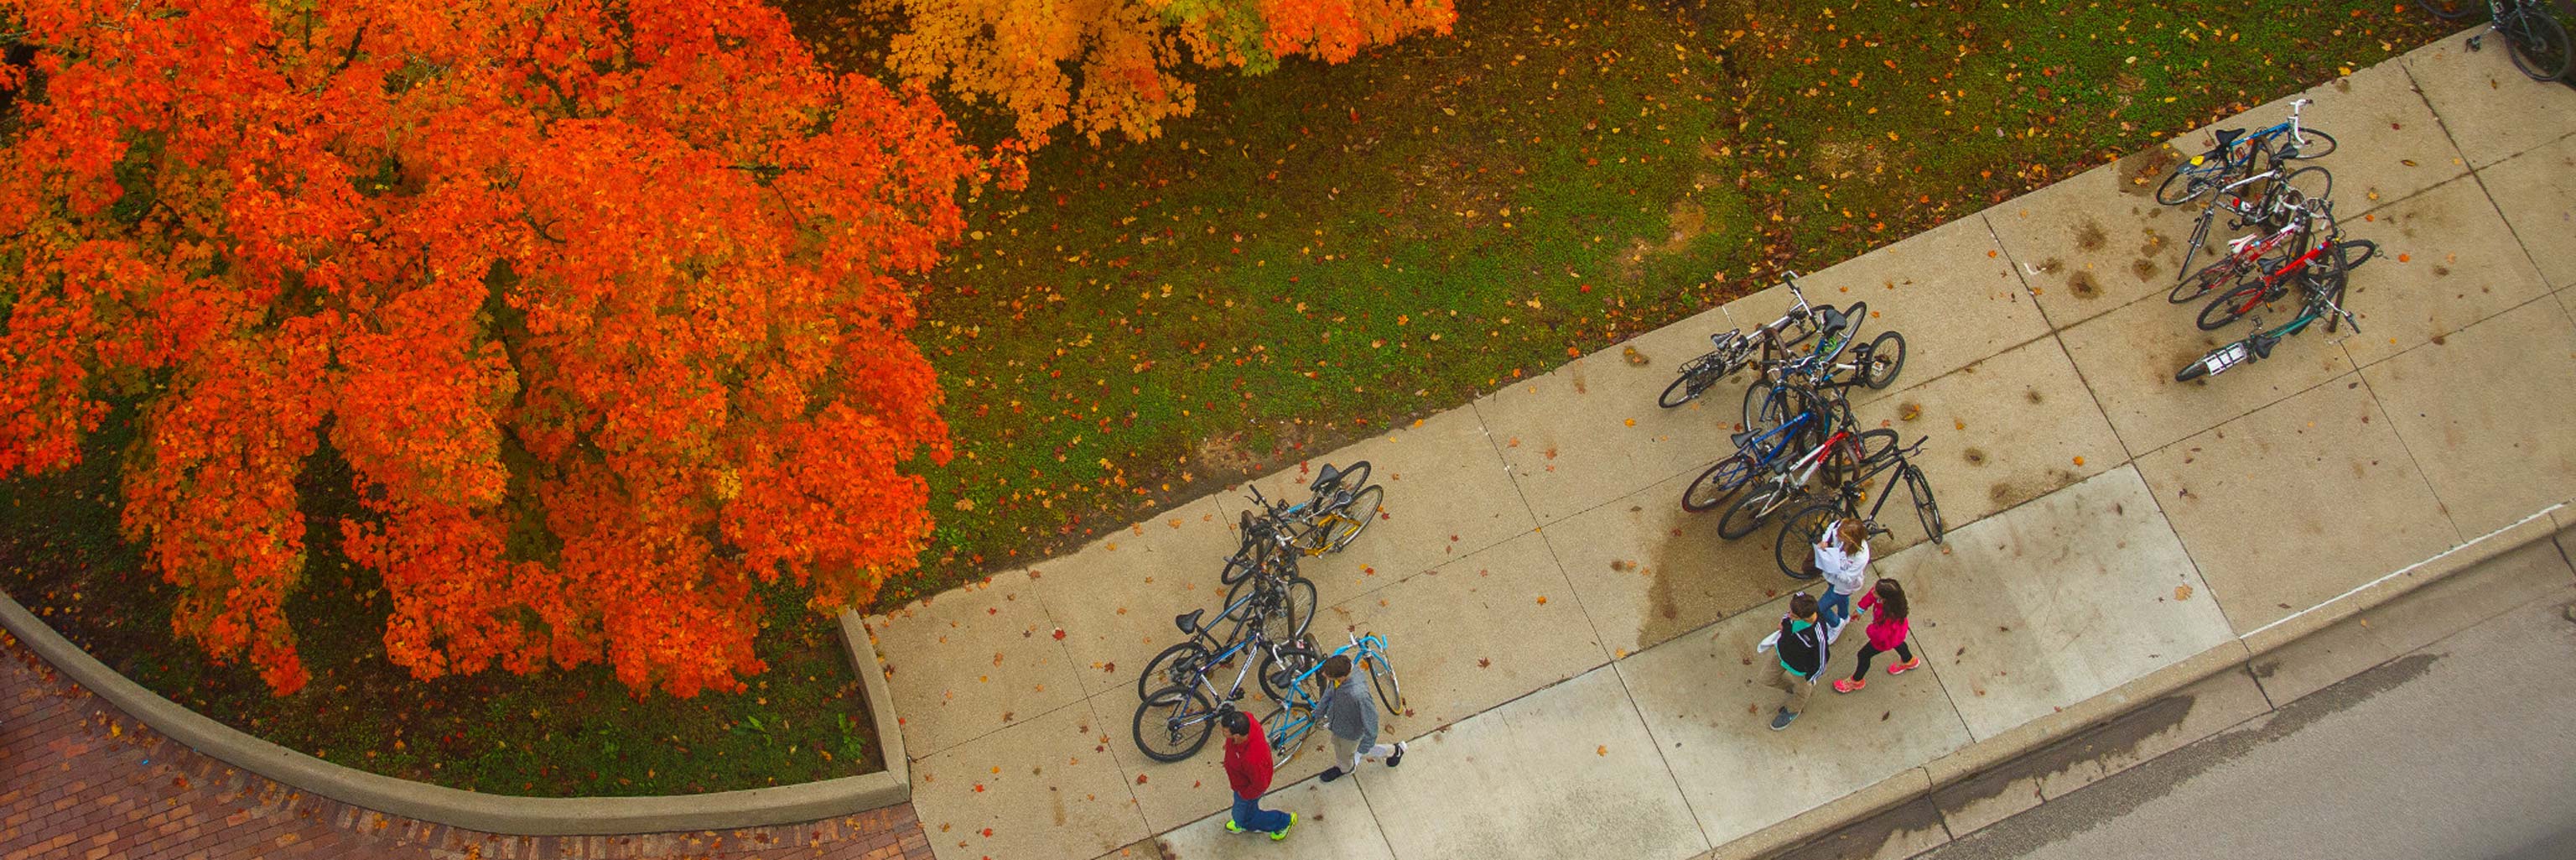 Autumn leaves on tree on Indiana University campus